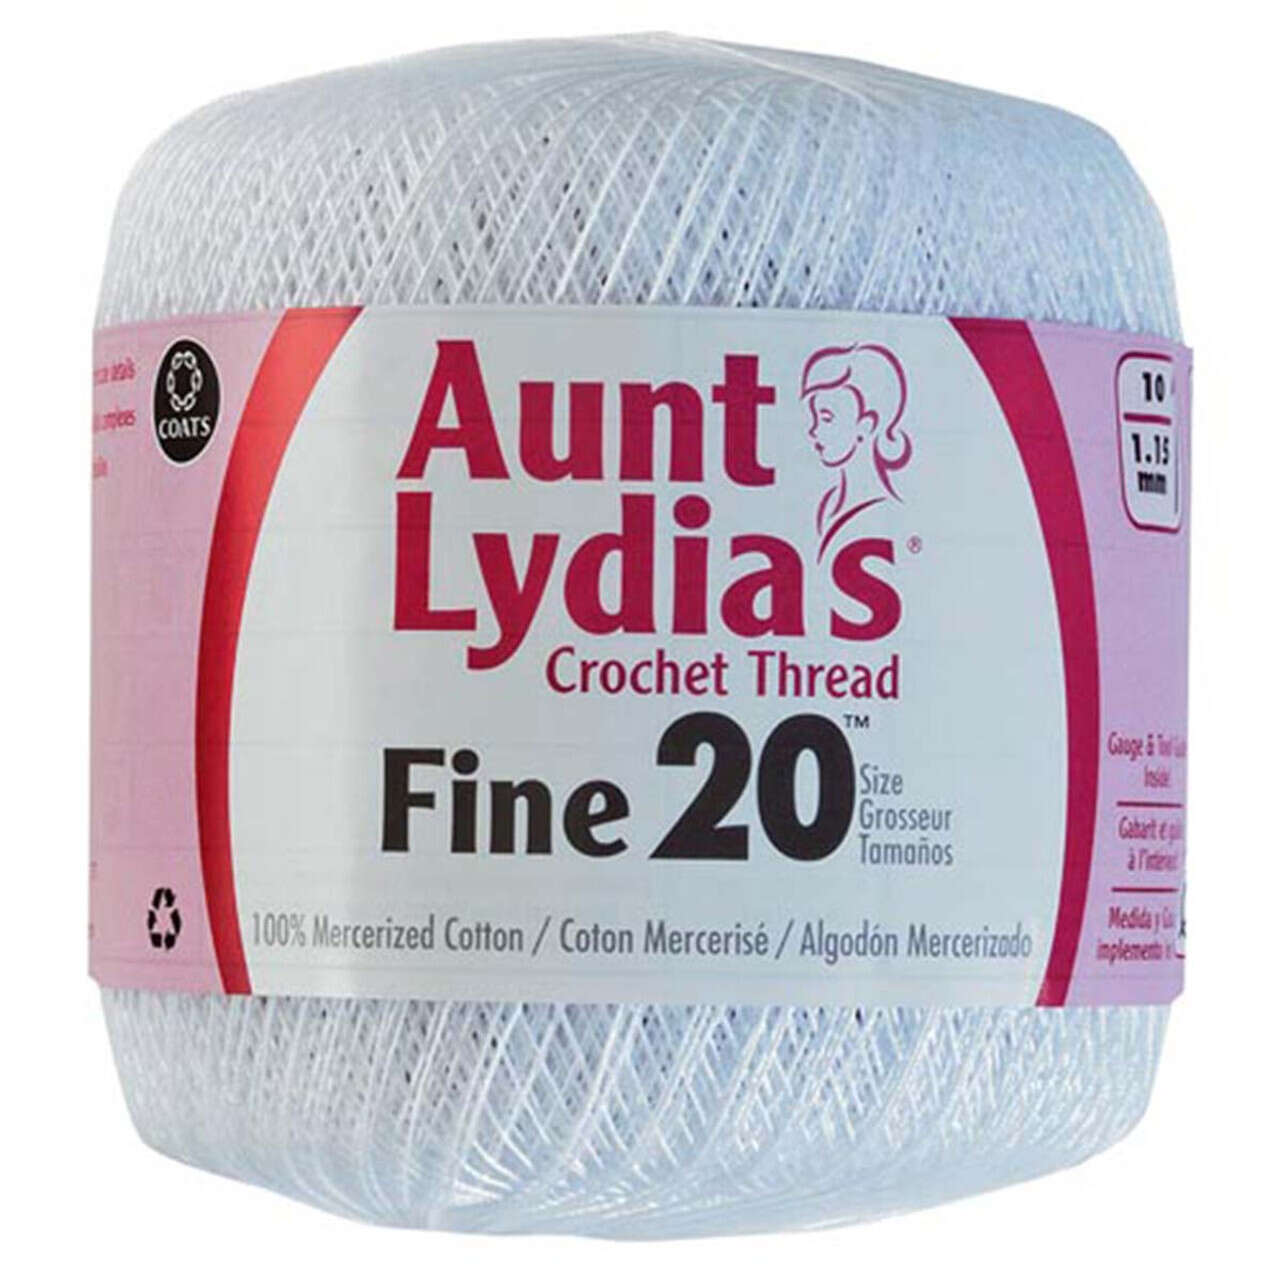 Aunt Lydia's Metallic Crochet Thread Size 10 